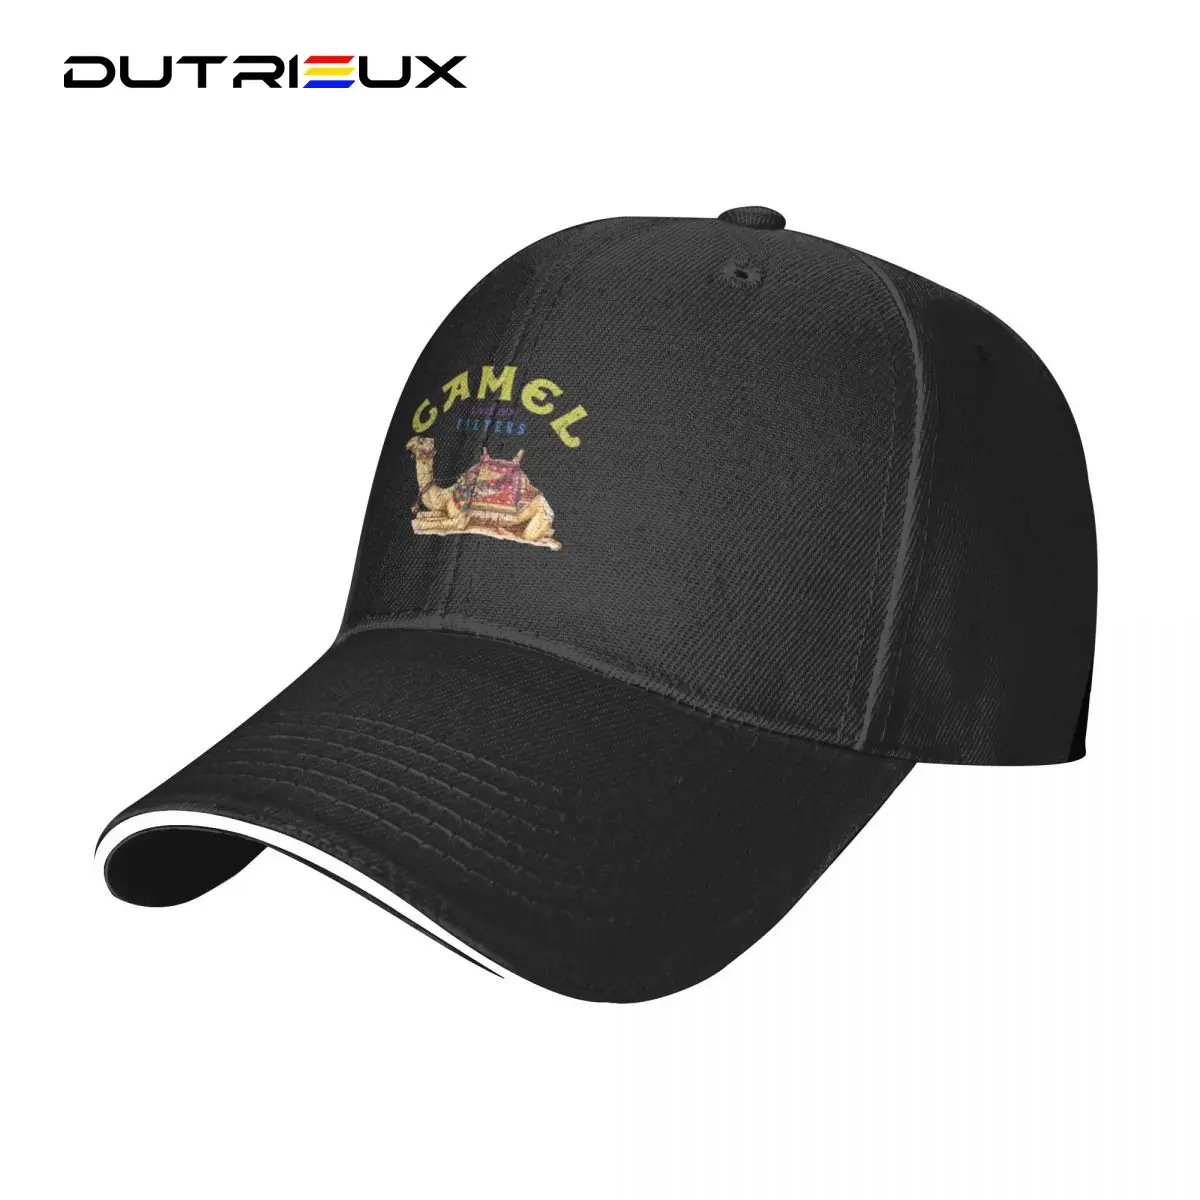 

Baseball Hat For Men Women Dromedary Camel Crush Cigarette Joe Camel Design Cap Hat Wild Ball Hat Male Cap Women's